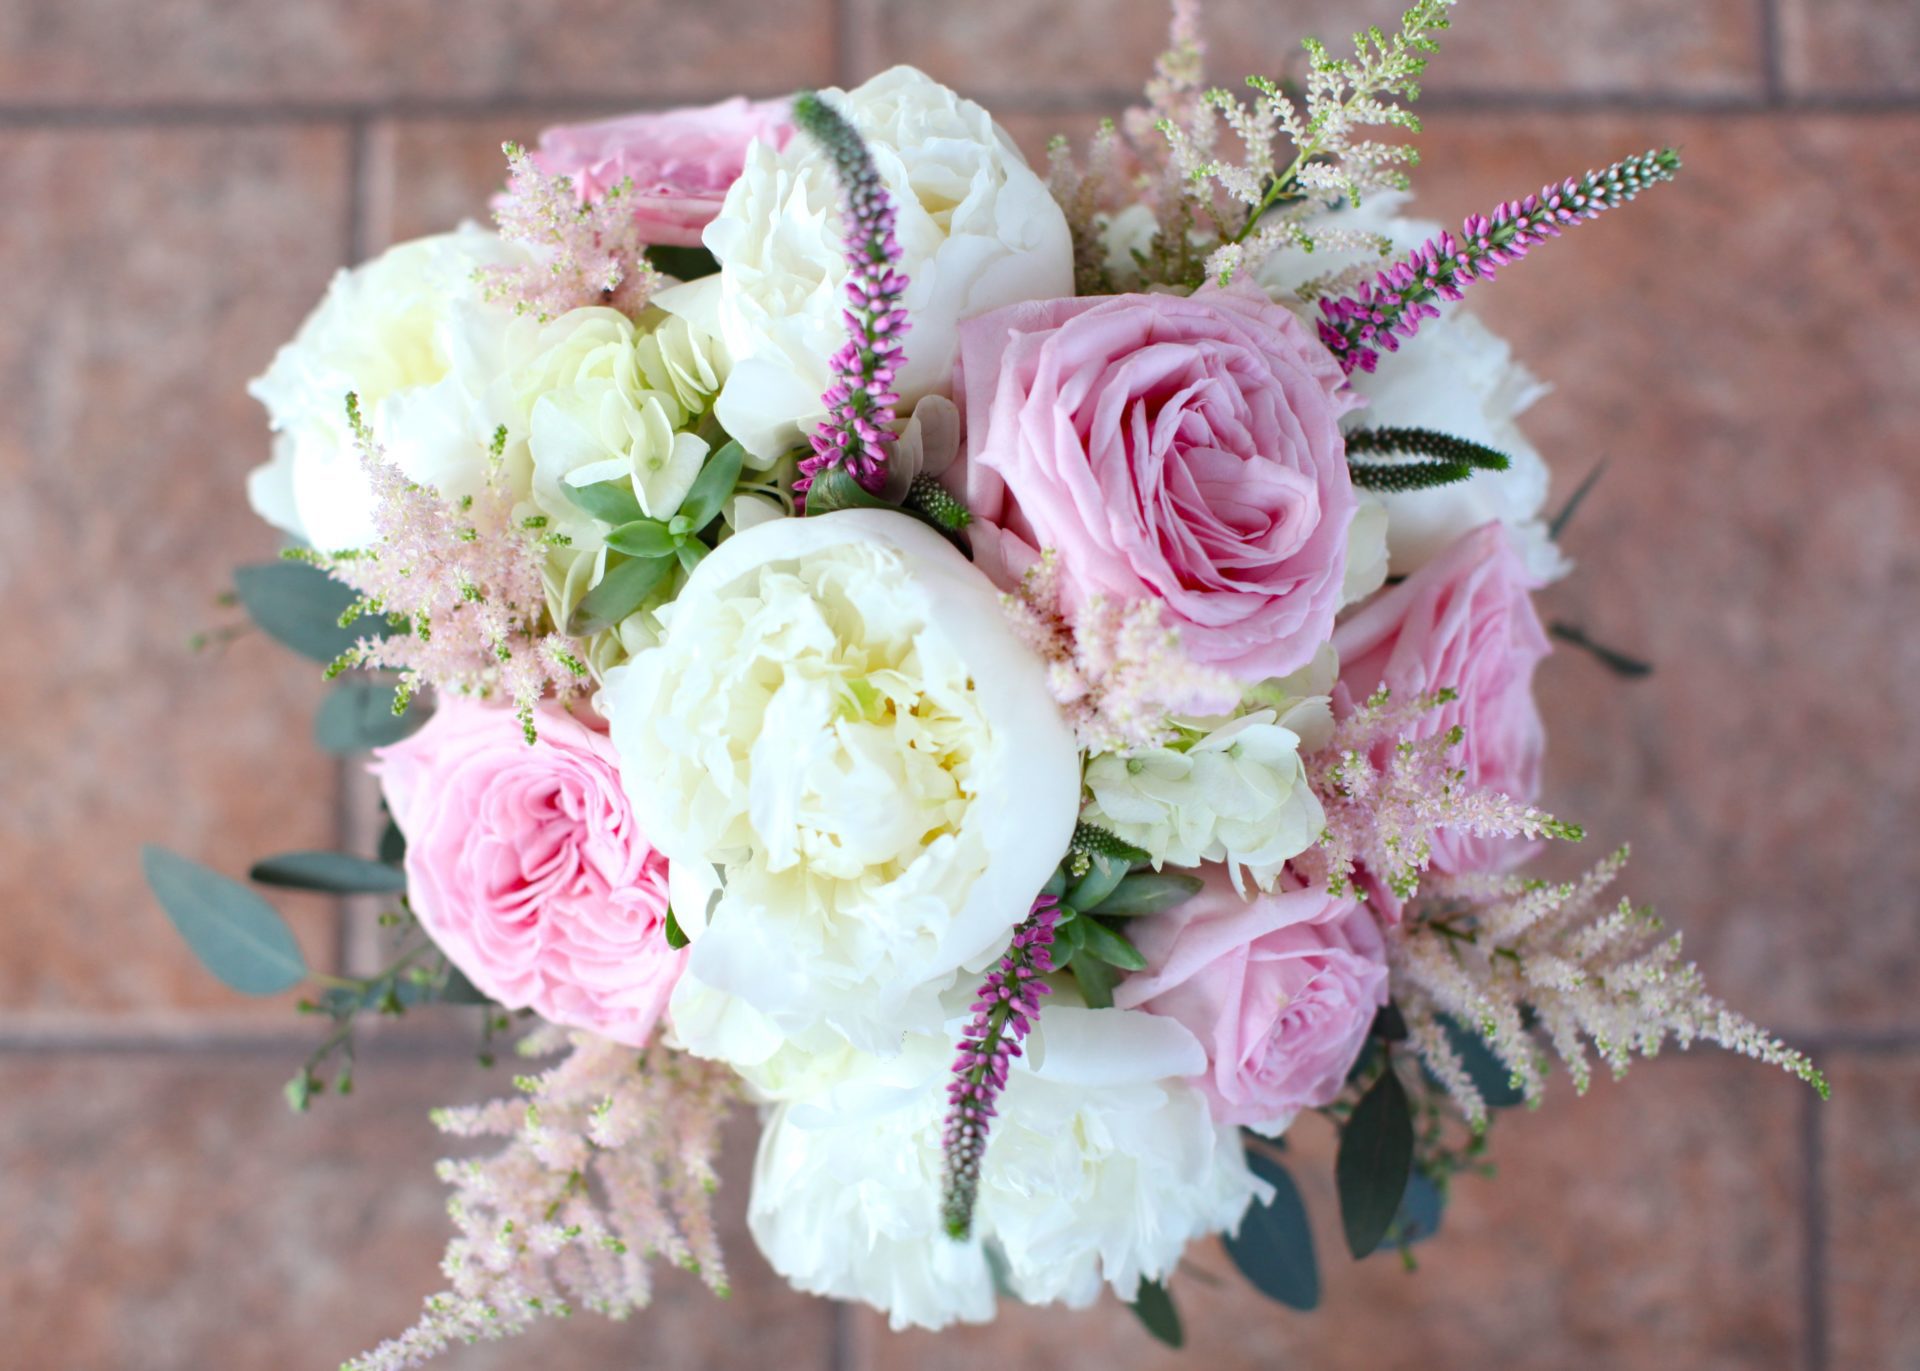 tea party theme wedding flowers, pastel pinks and white wedding